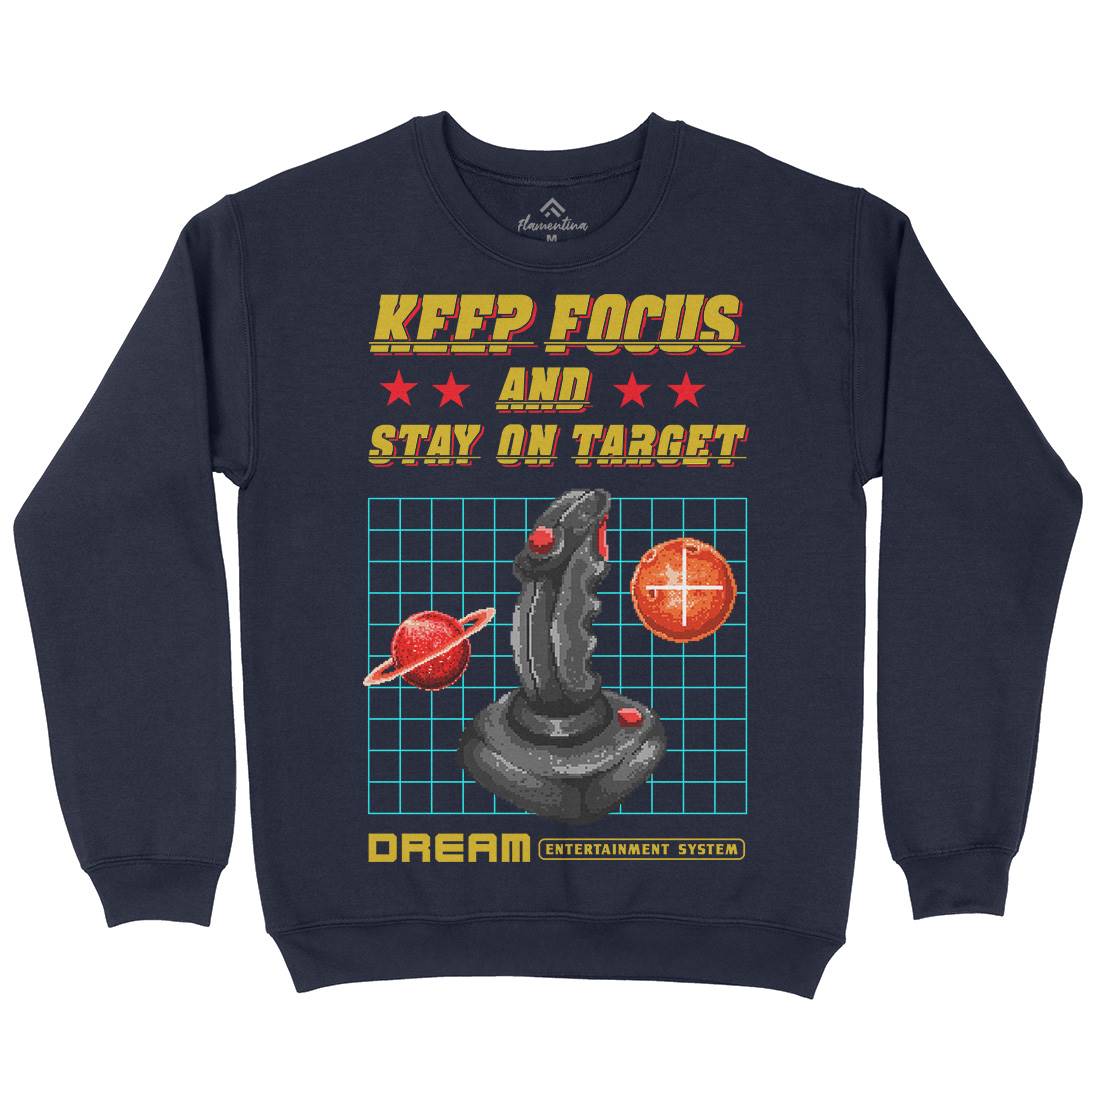 Stay On Target Kids Crew Neck Sweatshirt Geek B959